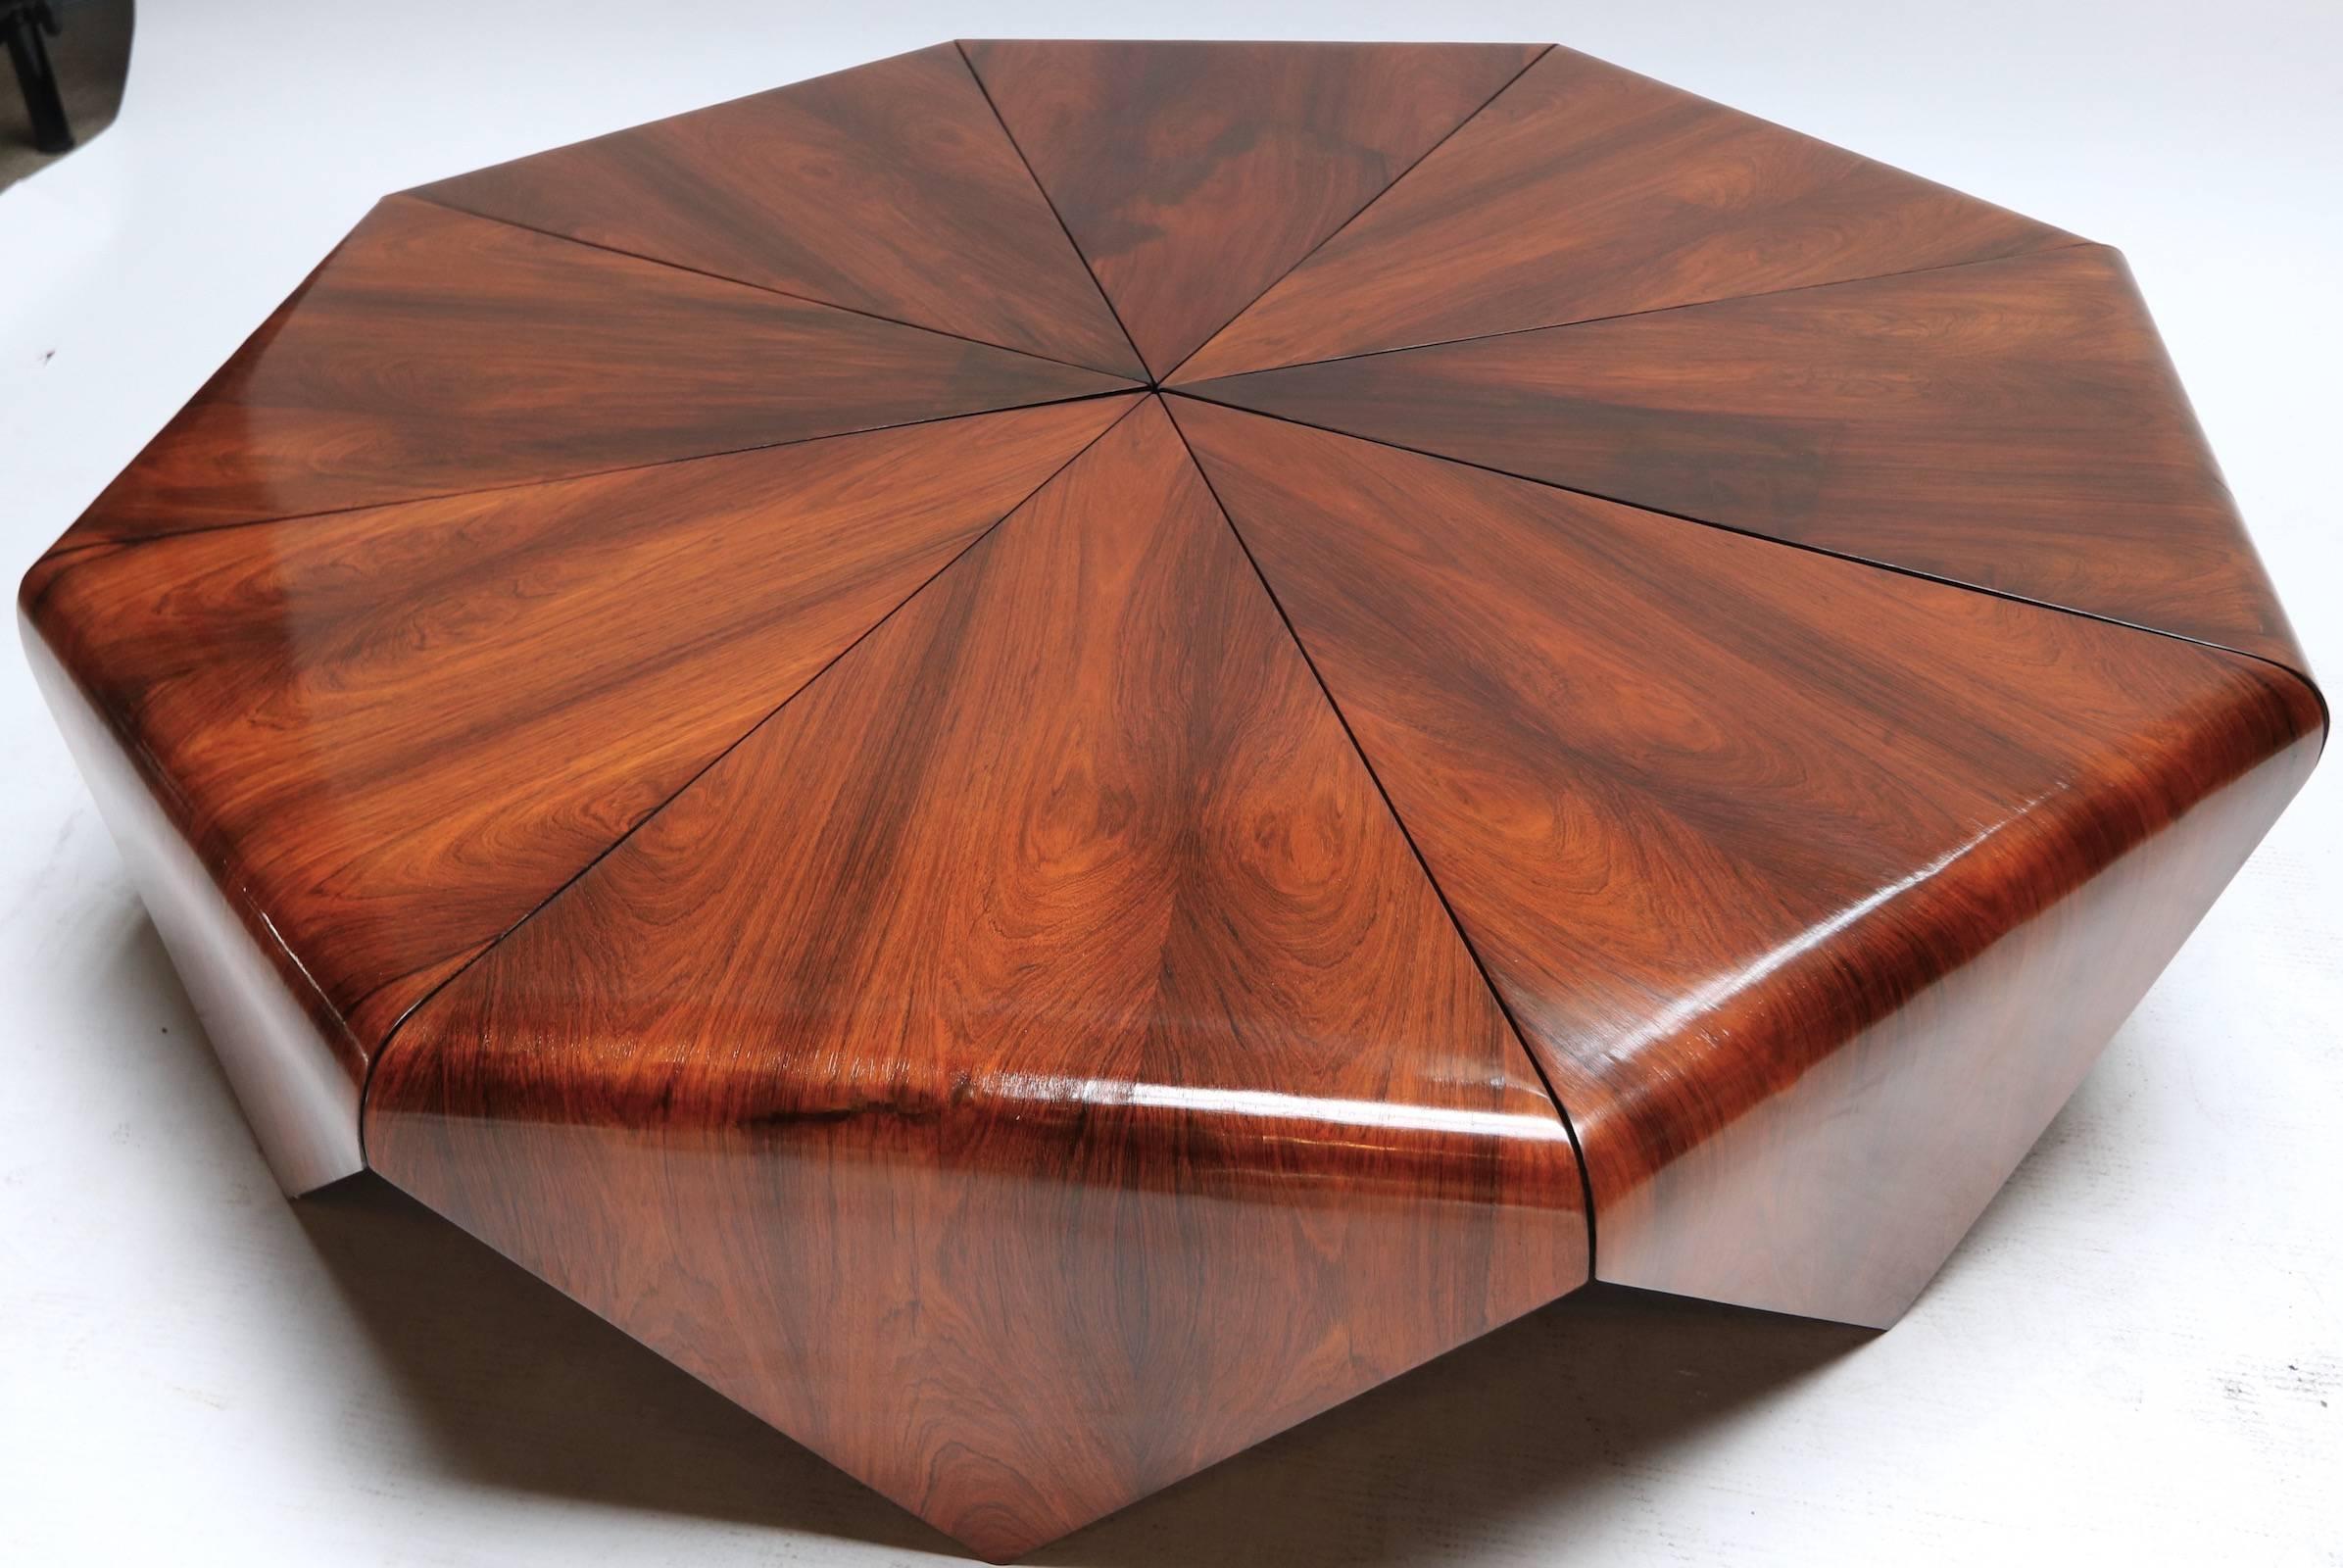 Very rare 1960s octagonal Brazilian jacaranda coffee table Petalas, a masterpiece designed by Jorge Zalszupin, one of the most famous Mid-Century Brazilian architects and designers.